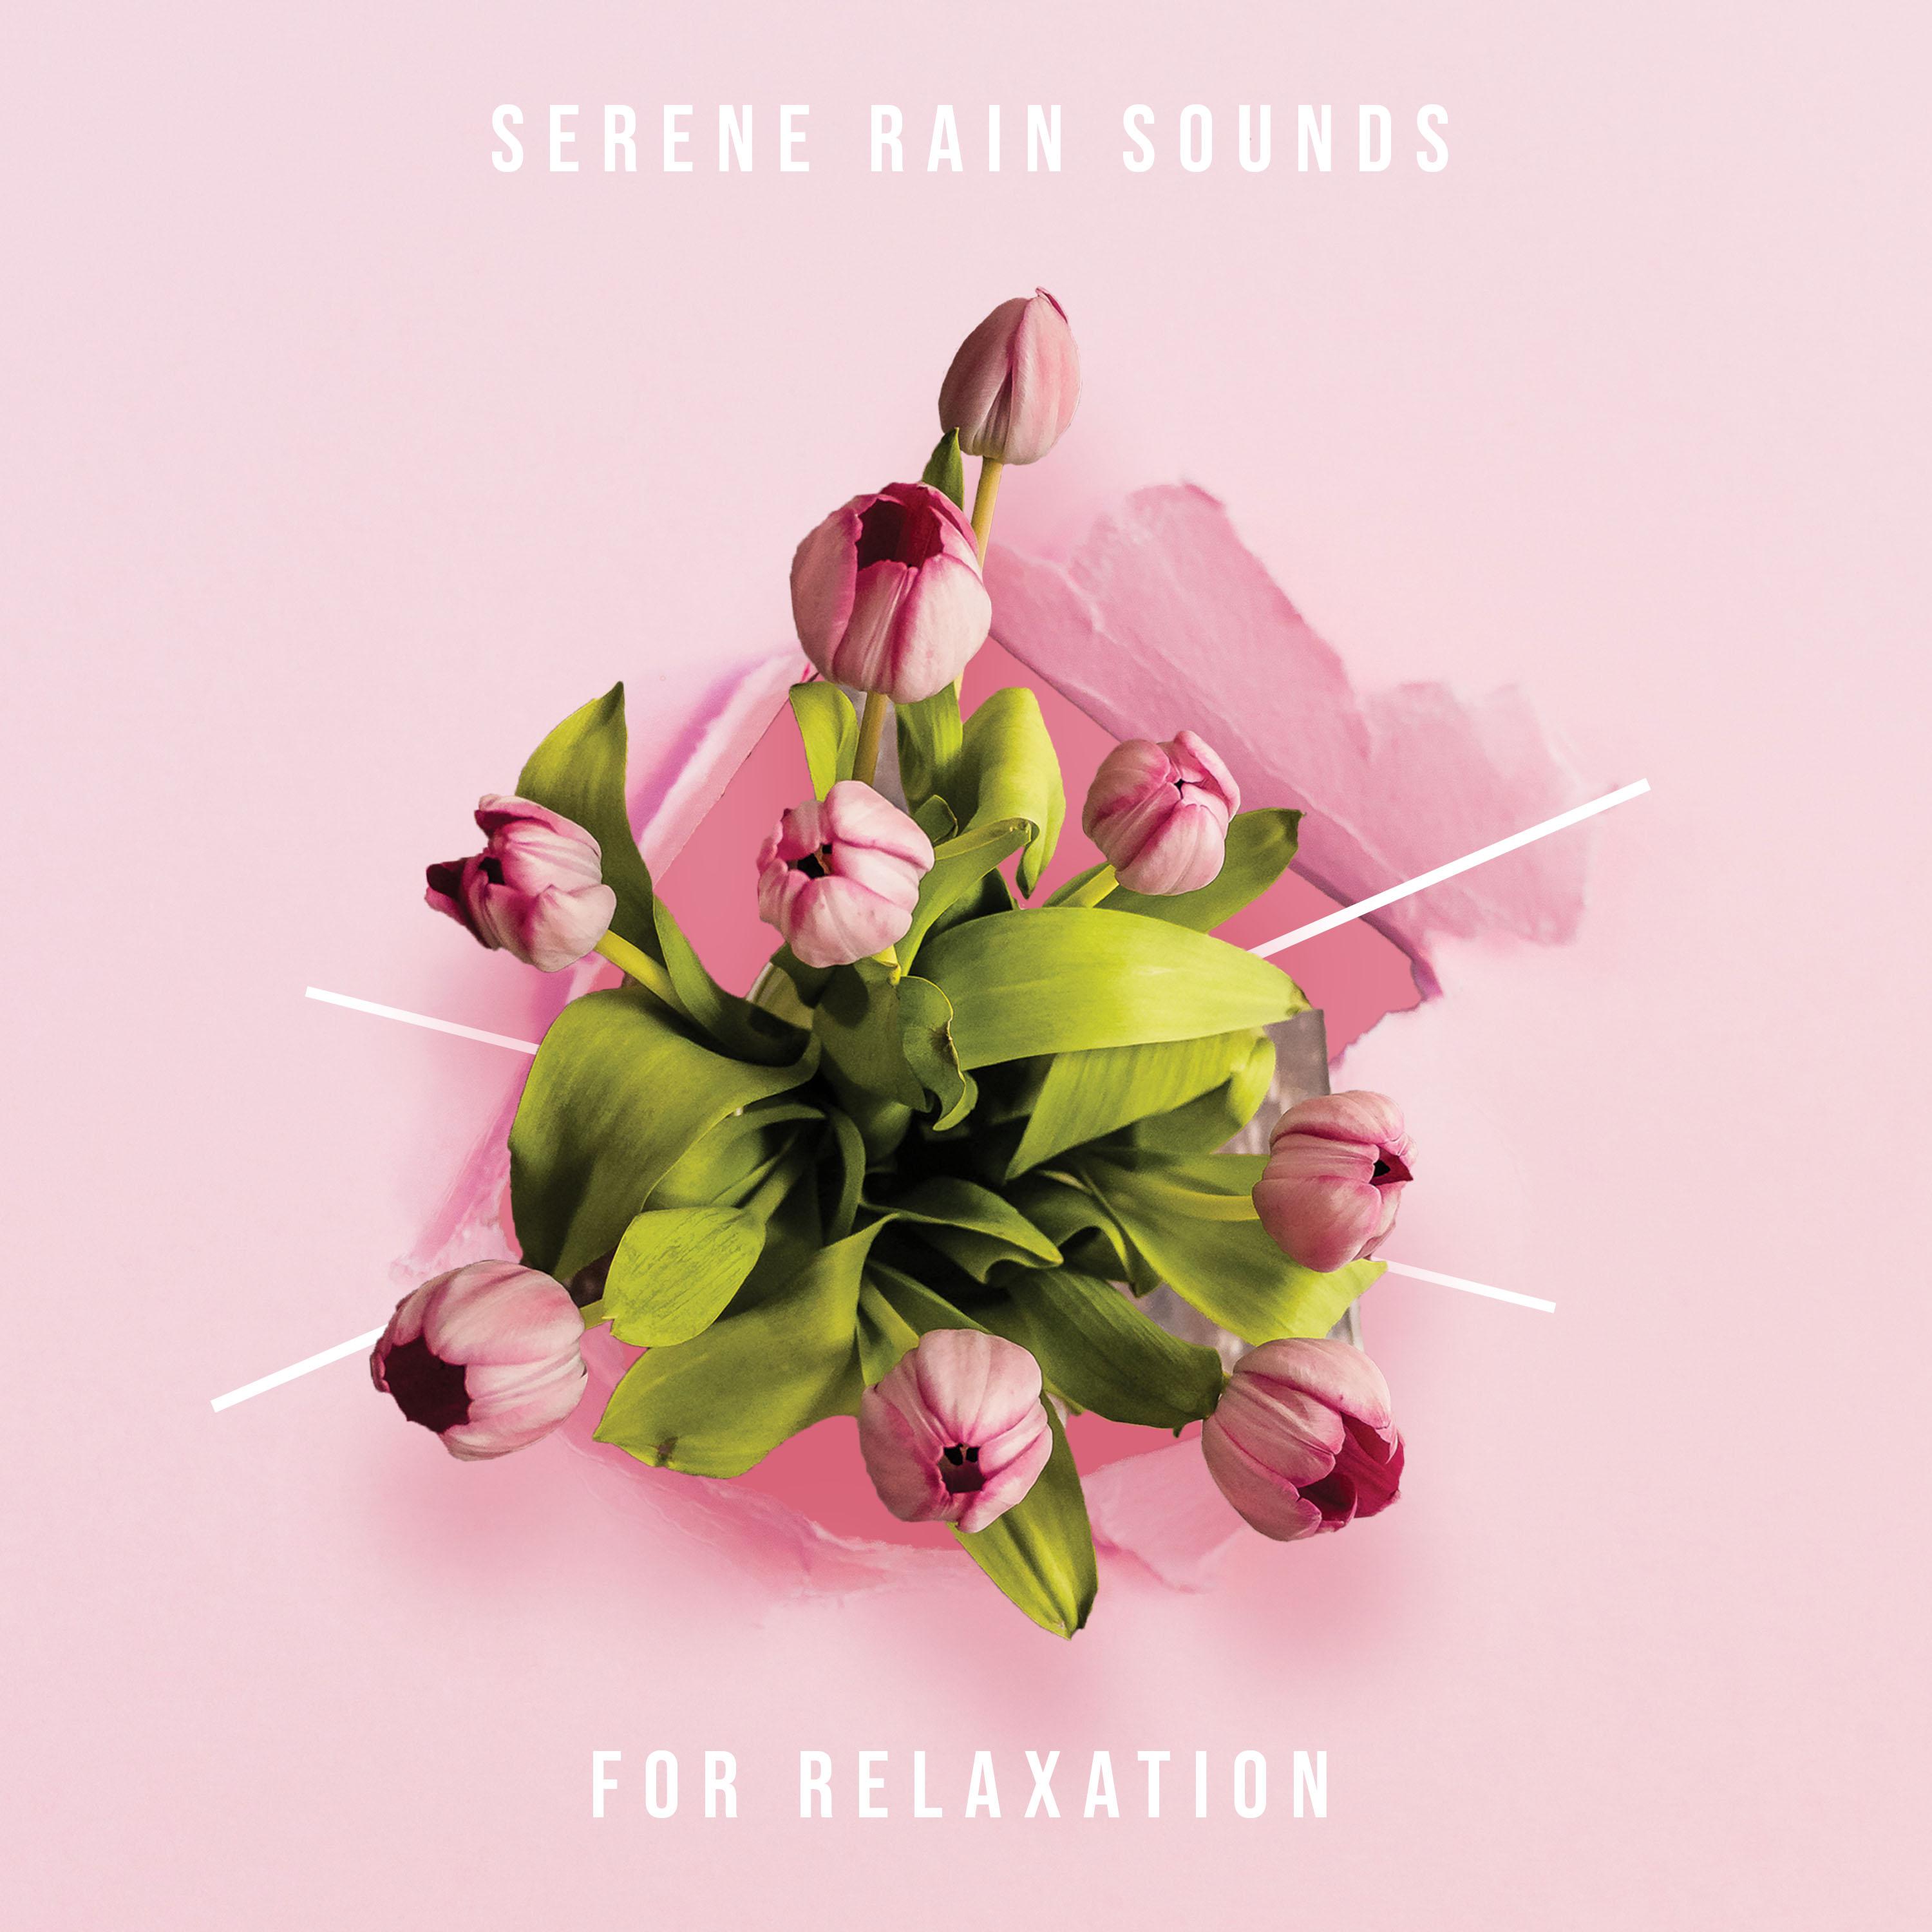 15 Serene Rain Sounds for Relaxation & Sleep